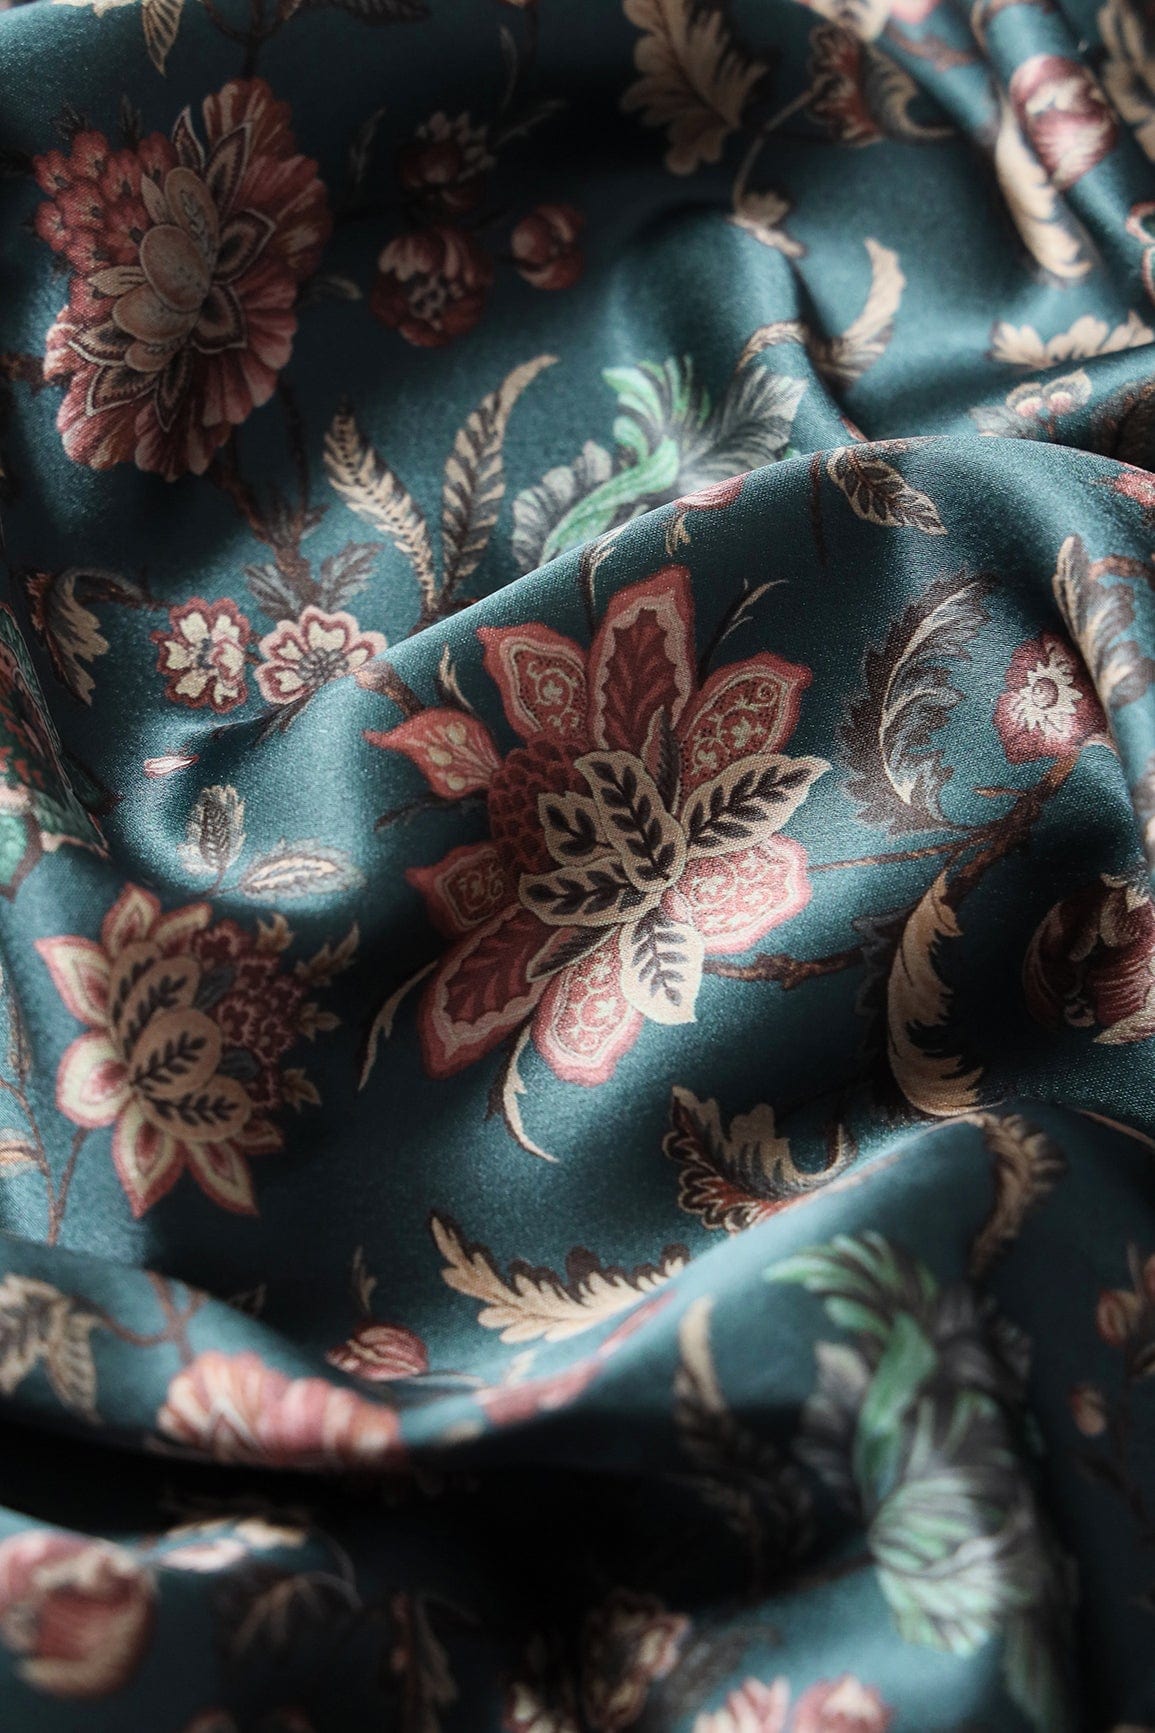 doeraa Prints Multi Color Floral Pattern Digital Print On Teal Blue Satin Fabric